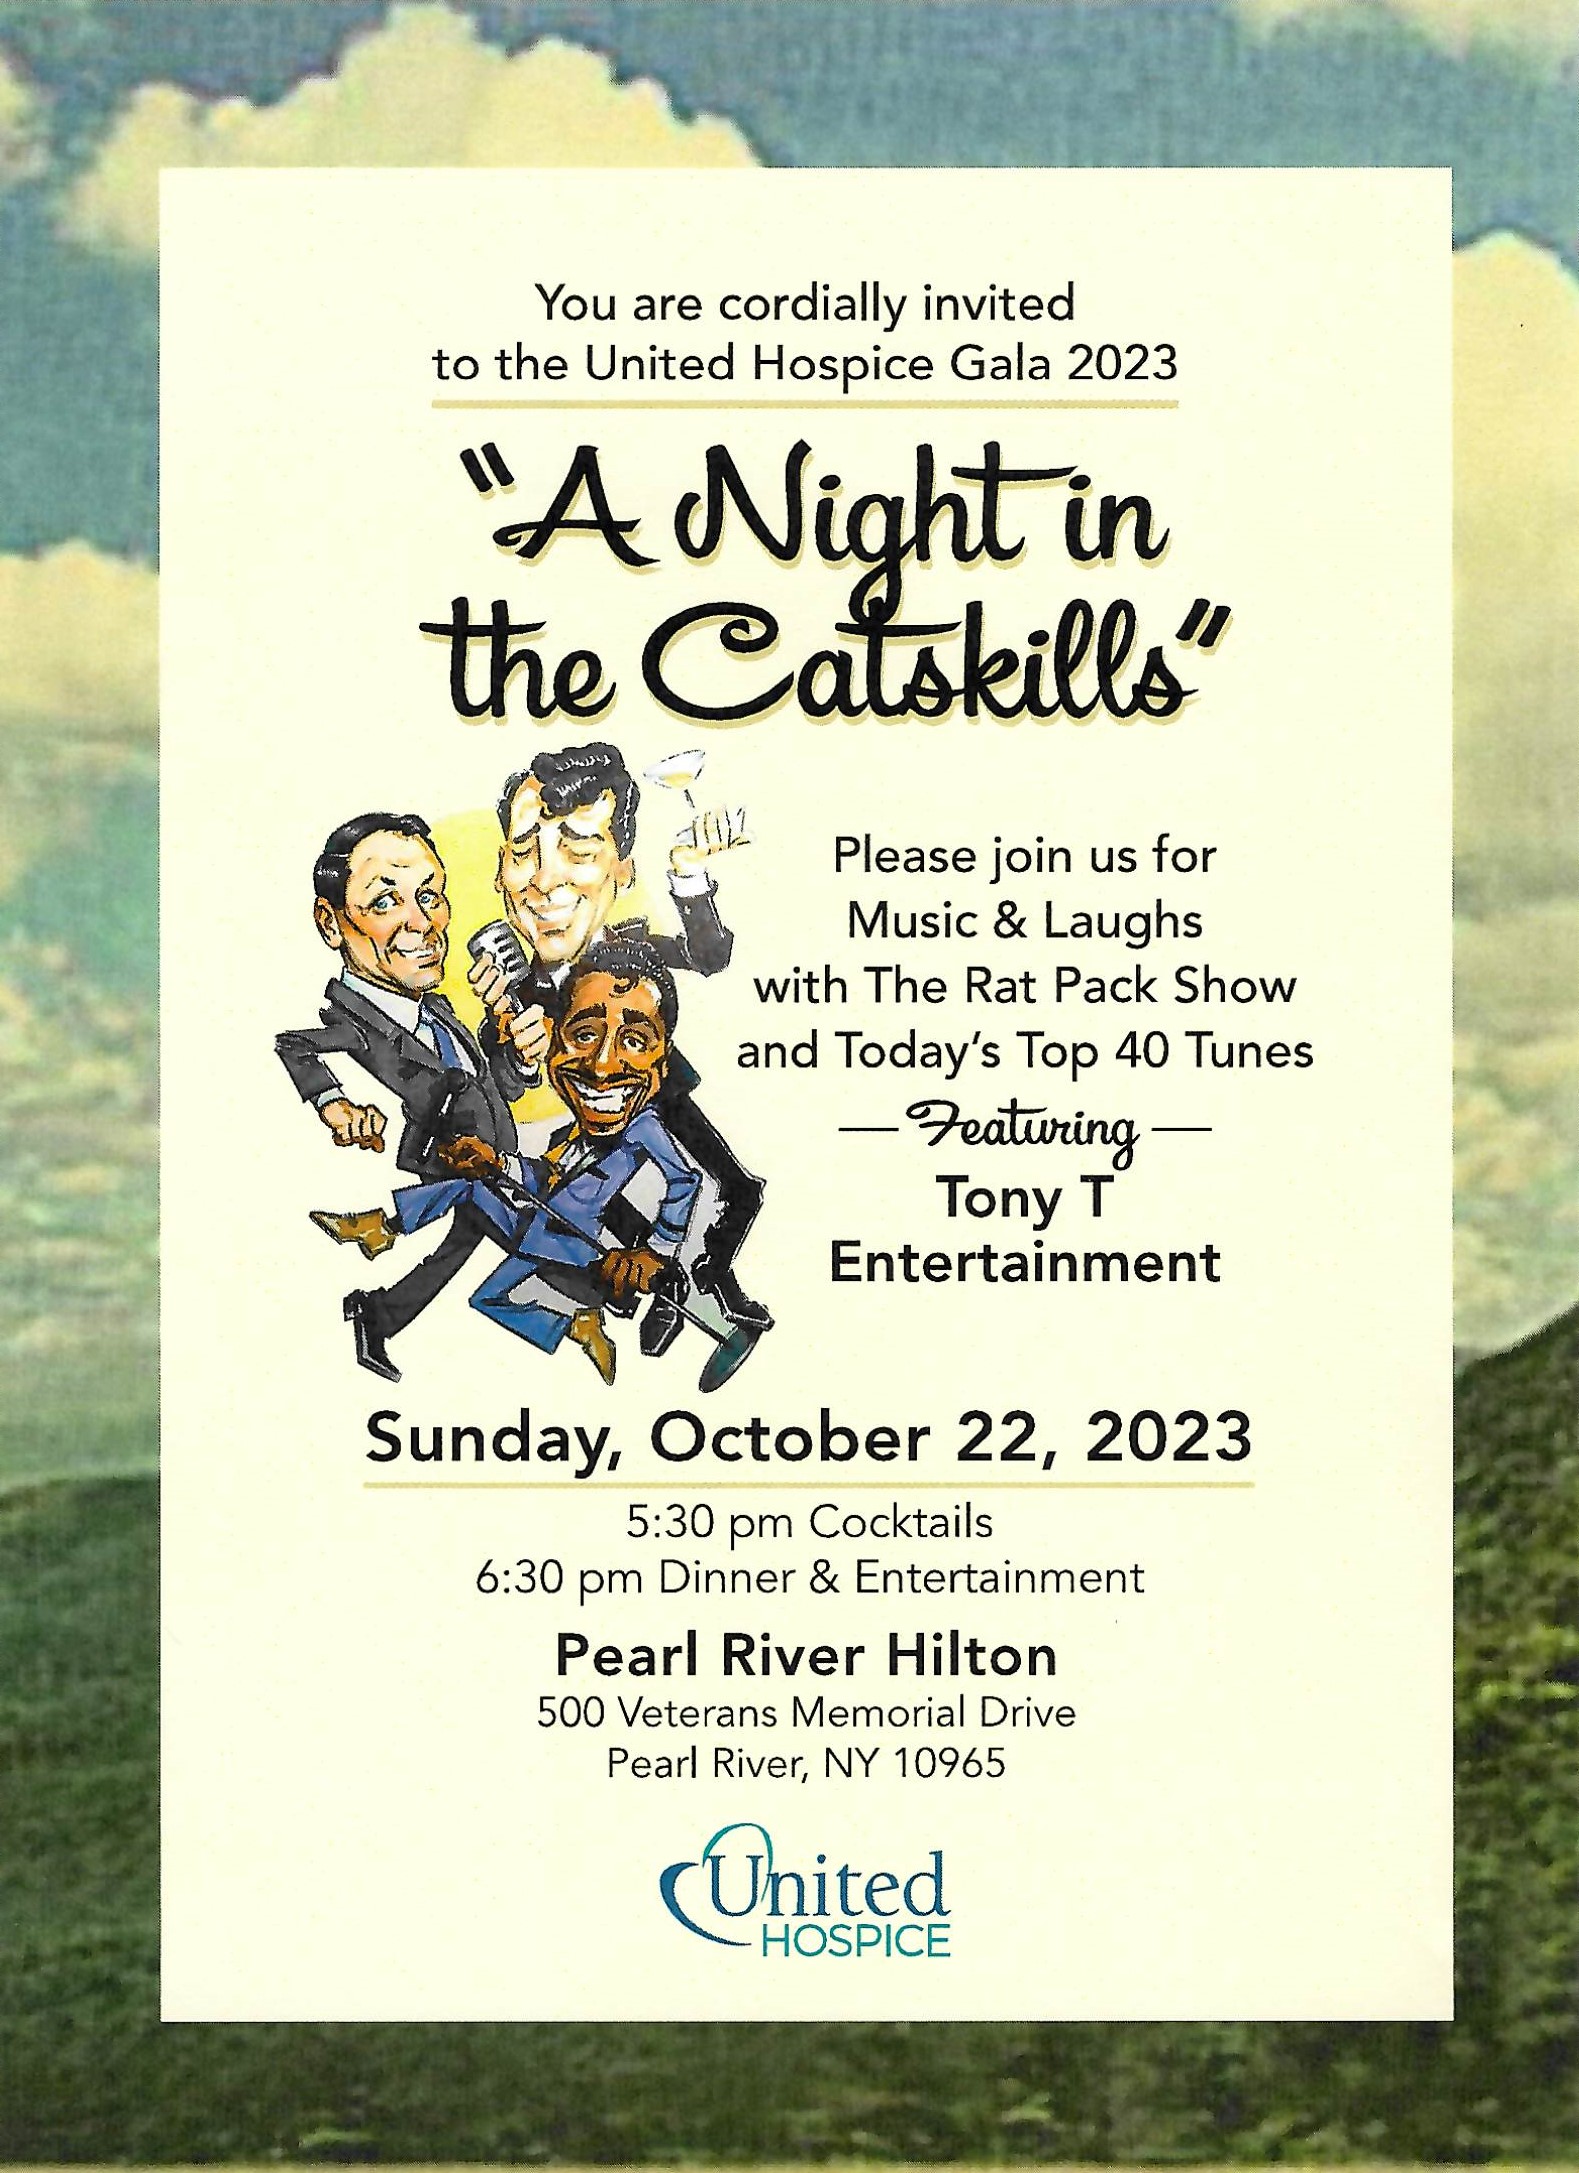 A Night in the Catskills - United Hospice Gala 2023 invitation